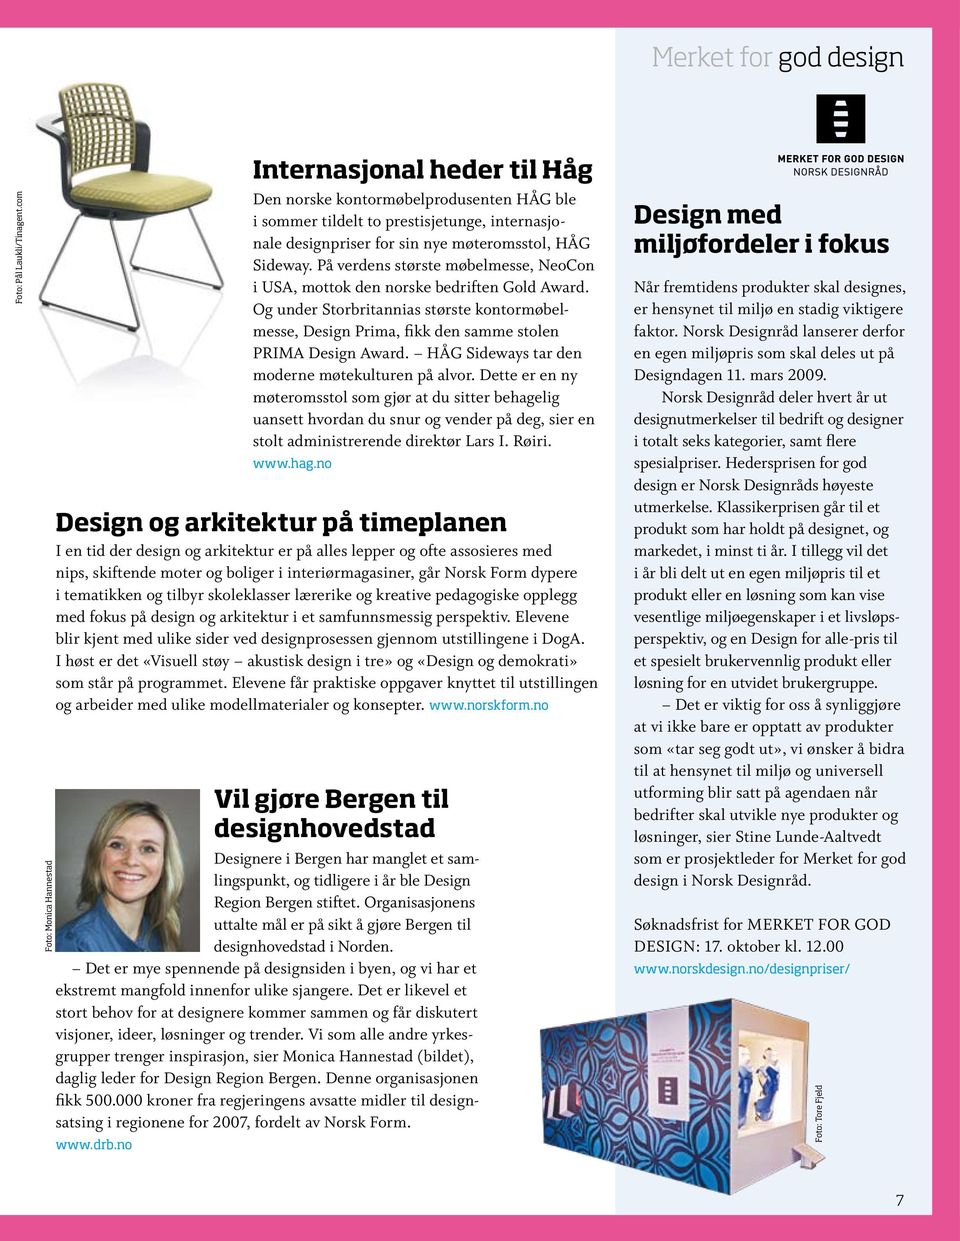 Norsk Form dypere i tematikken og tilbyr skoleklasser lærerike og kreative pedagogiske opplegg med fokus på design og arkitektur i et samfunnsmessig perspektiv.